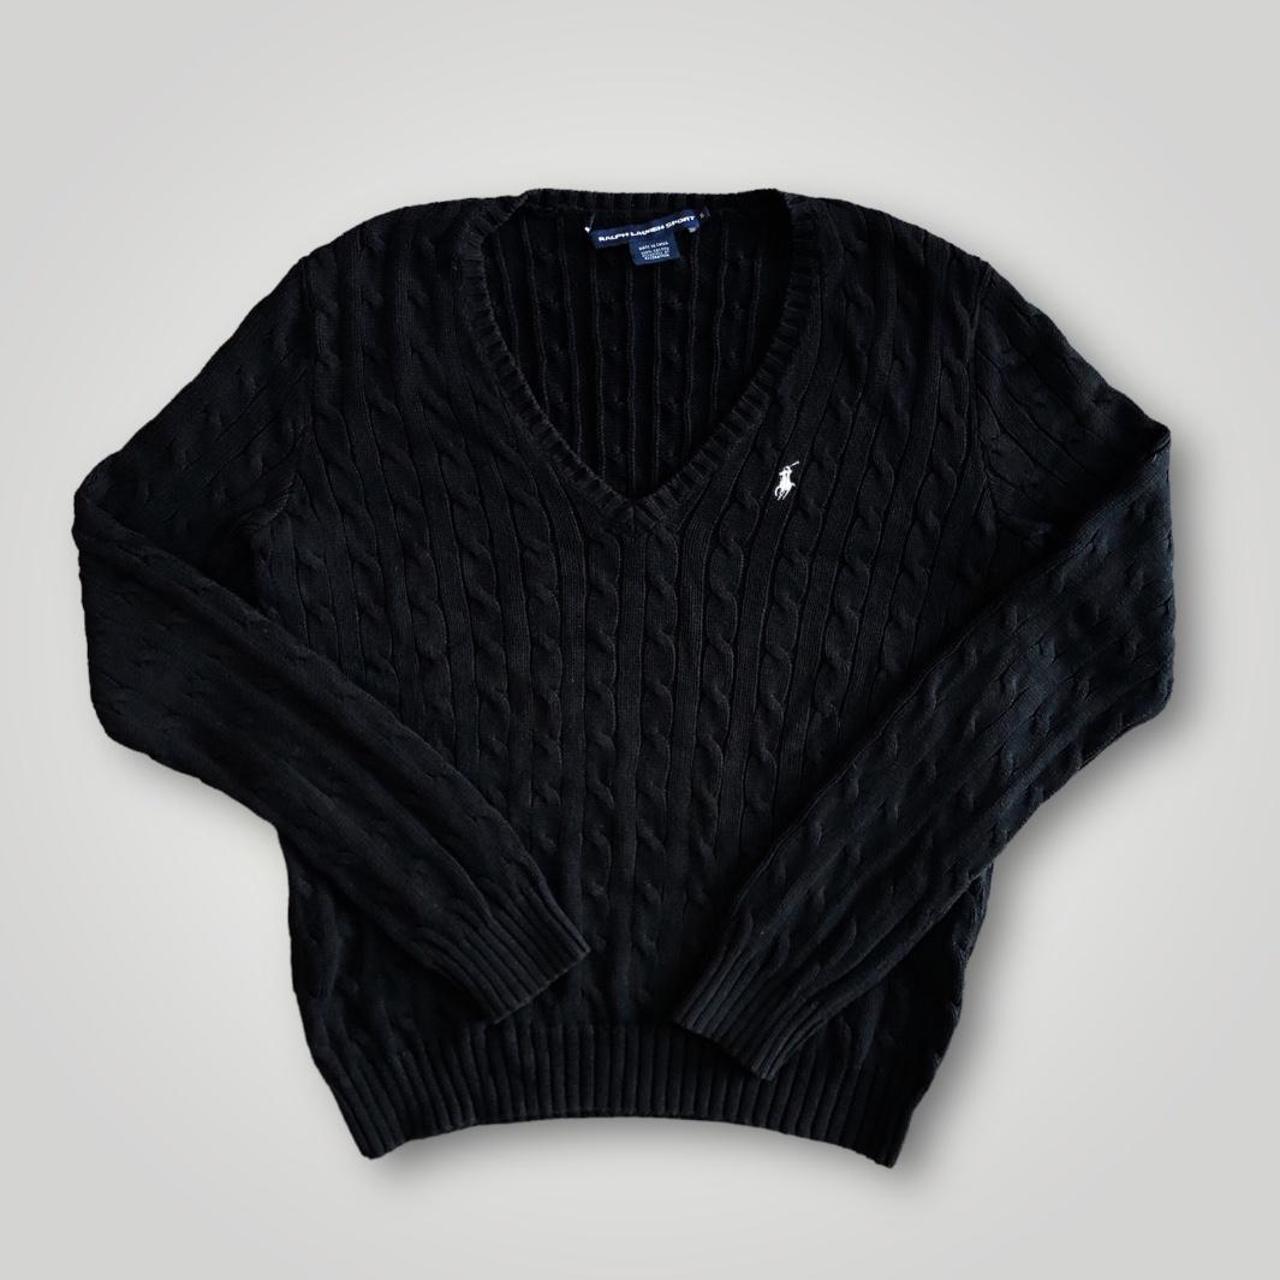 Ralph Lauren Women’s black knit jumper sweatshirt... - Depop